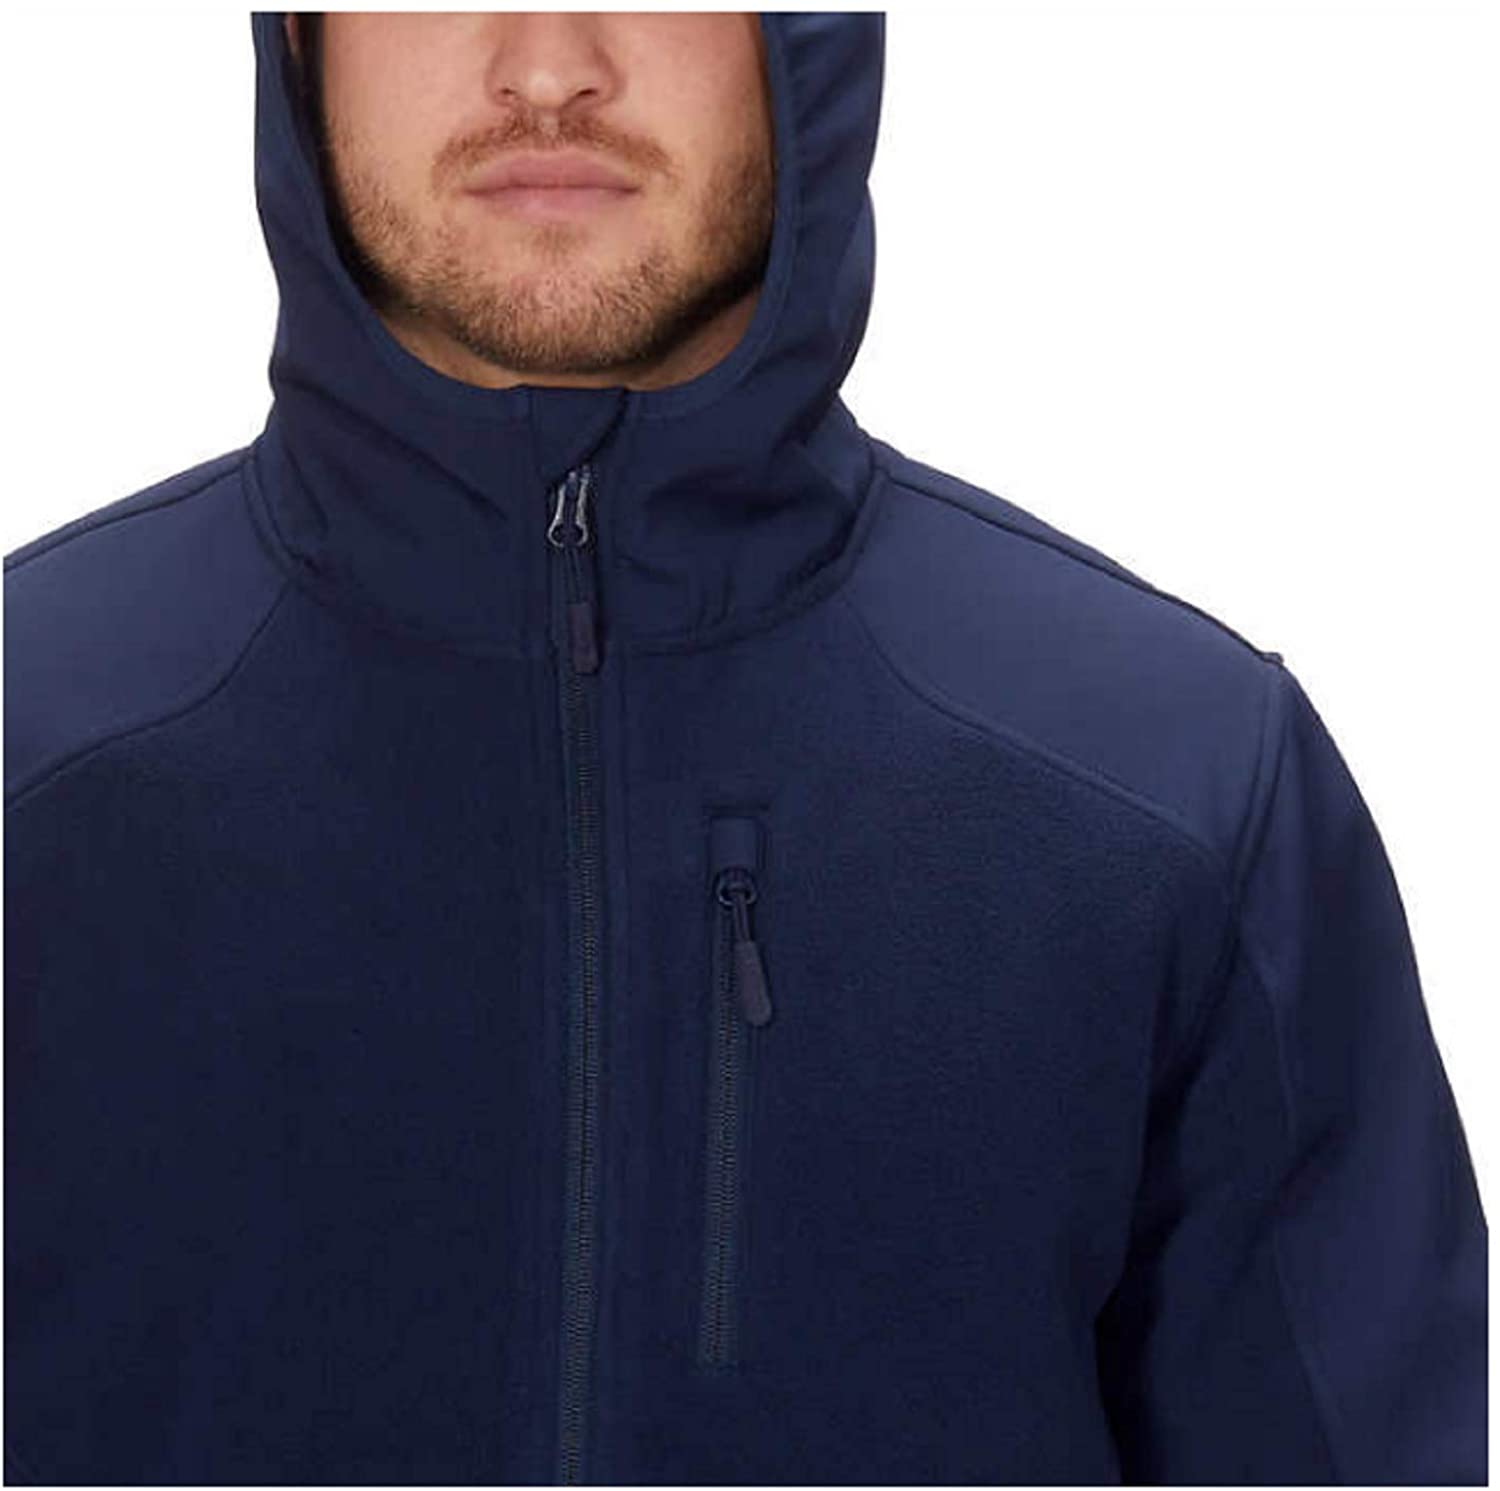 Reebok Mens Hybrid Softshell Hooded Jacket